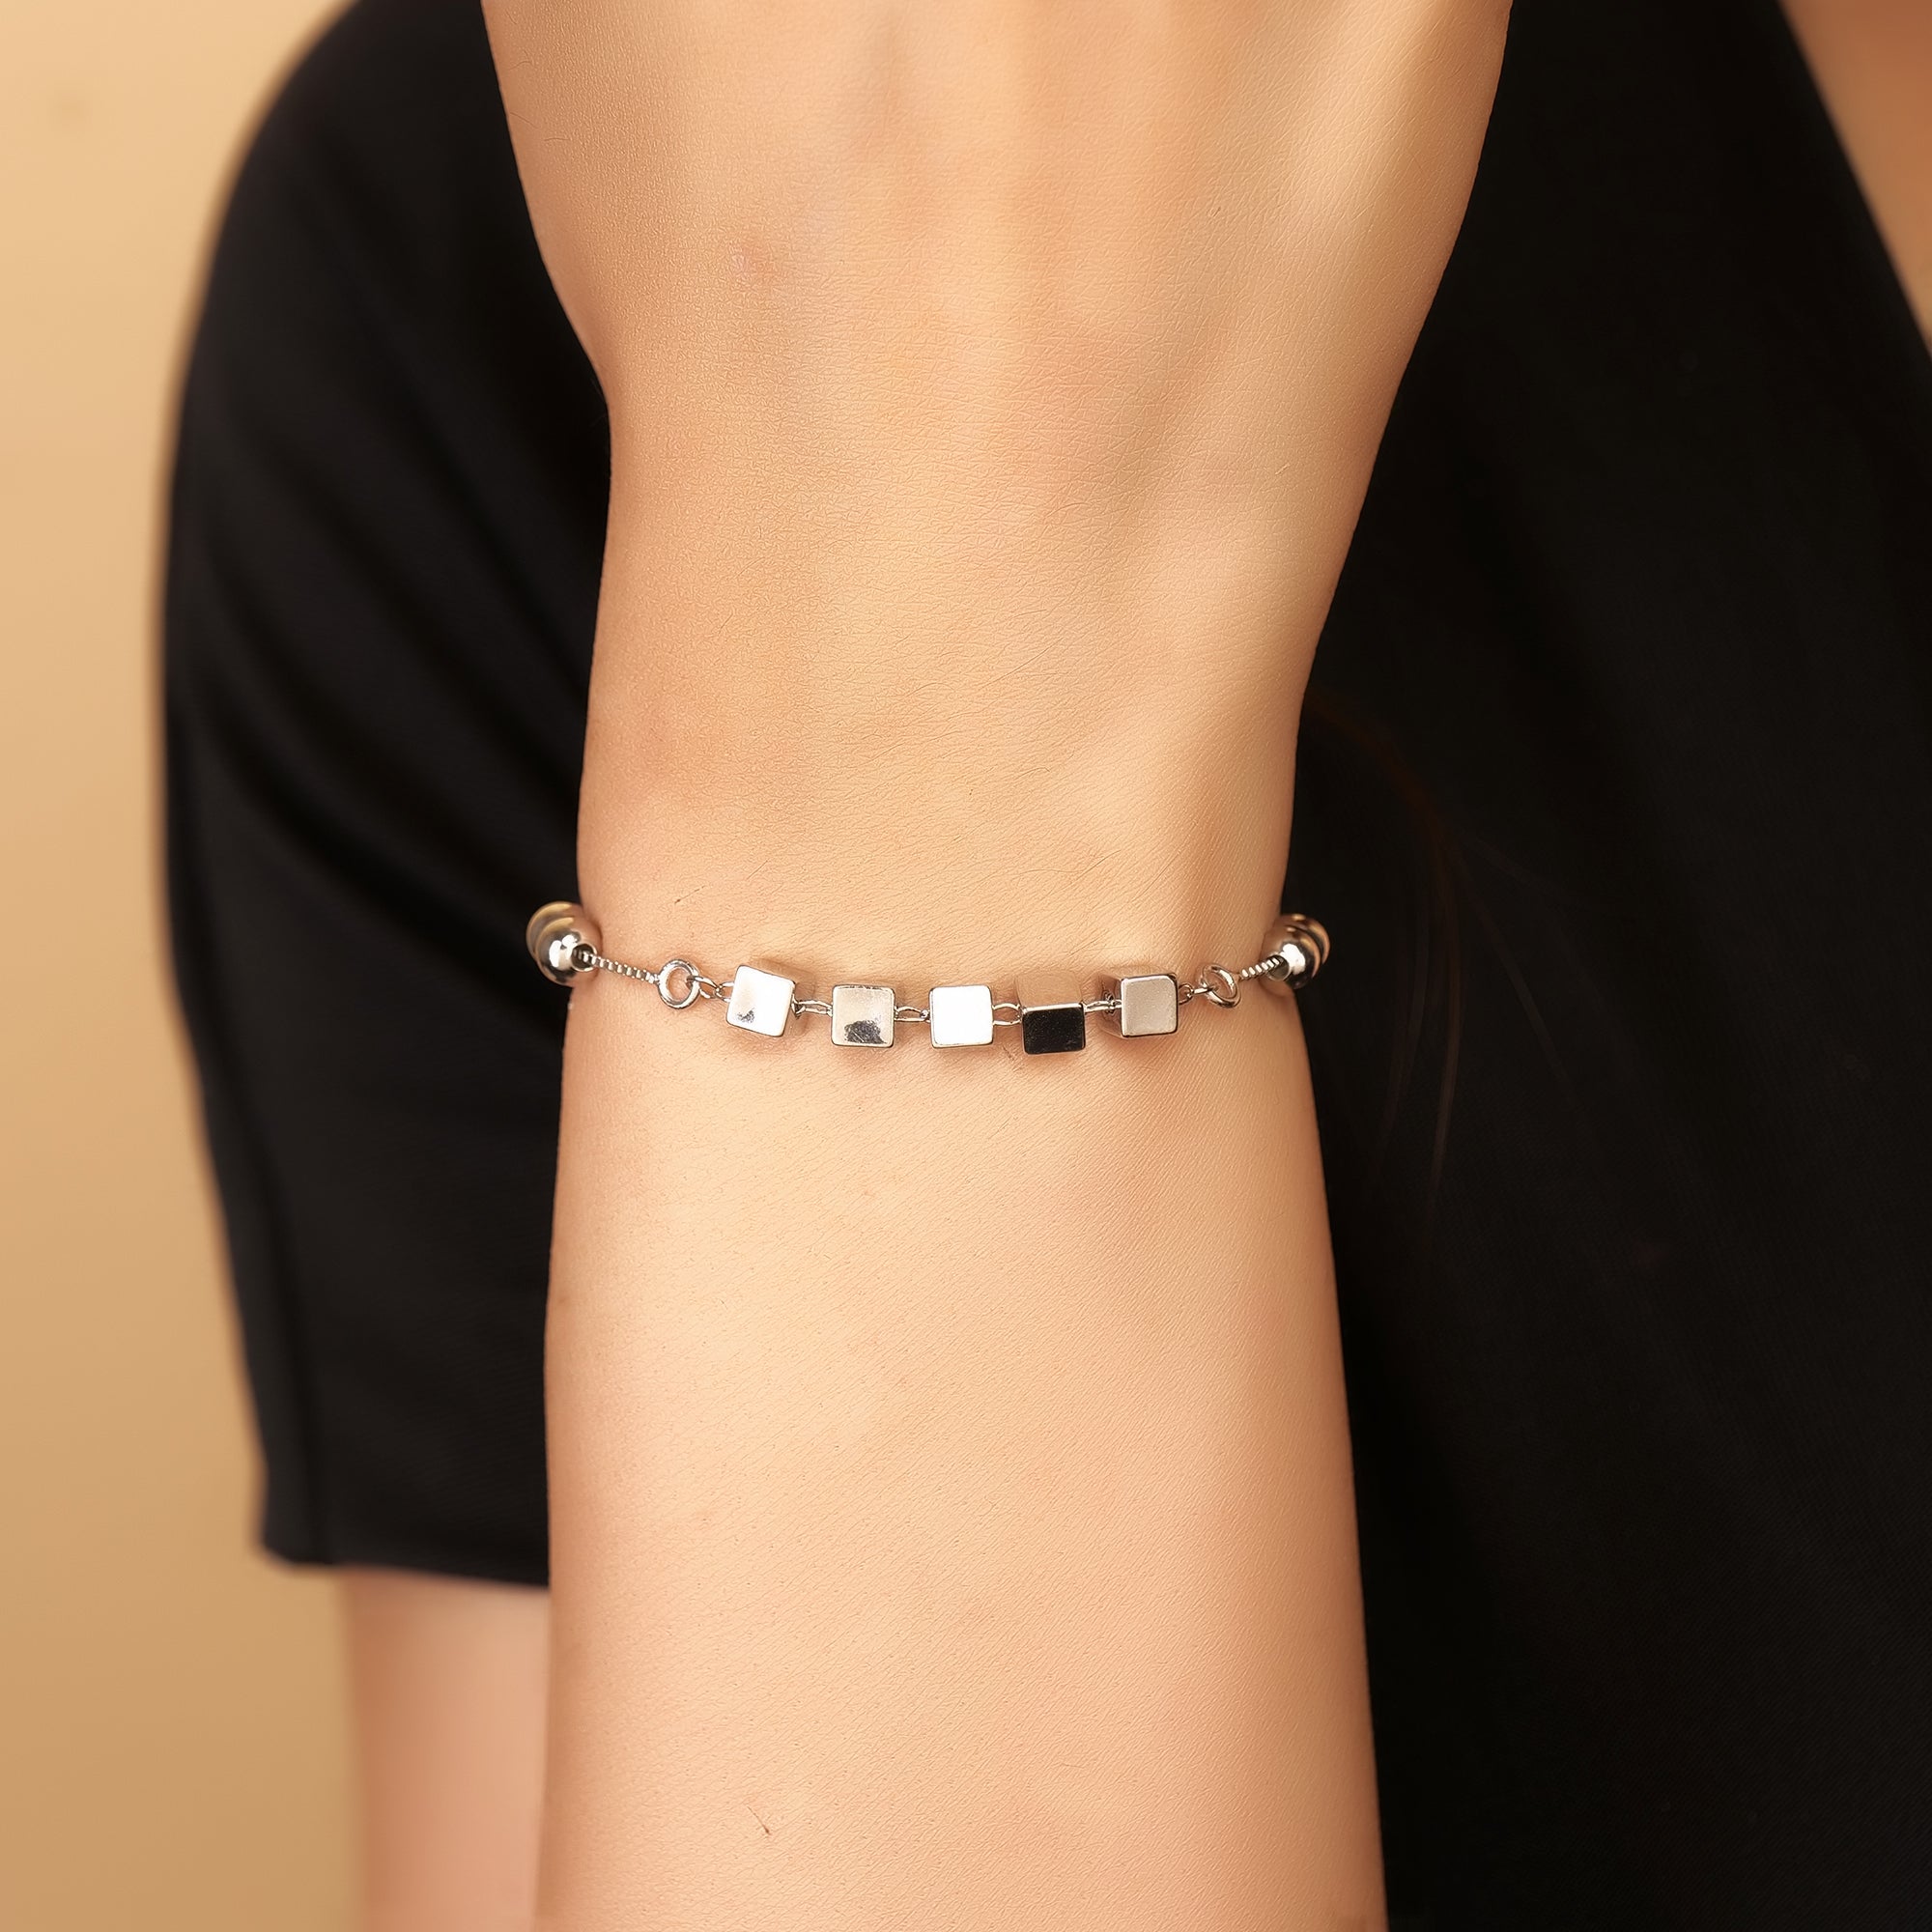 Five square silver bracelet